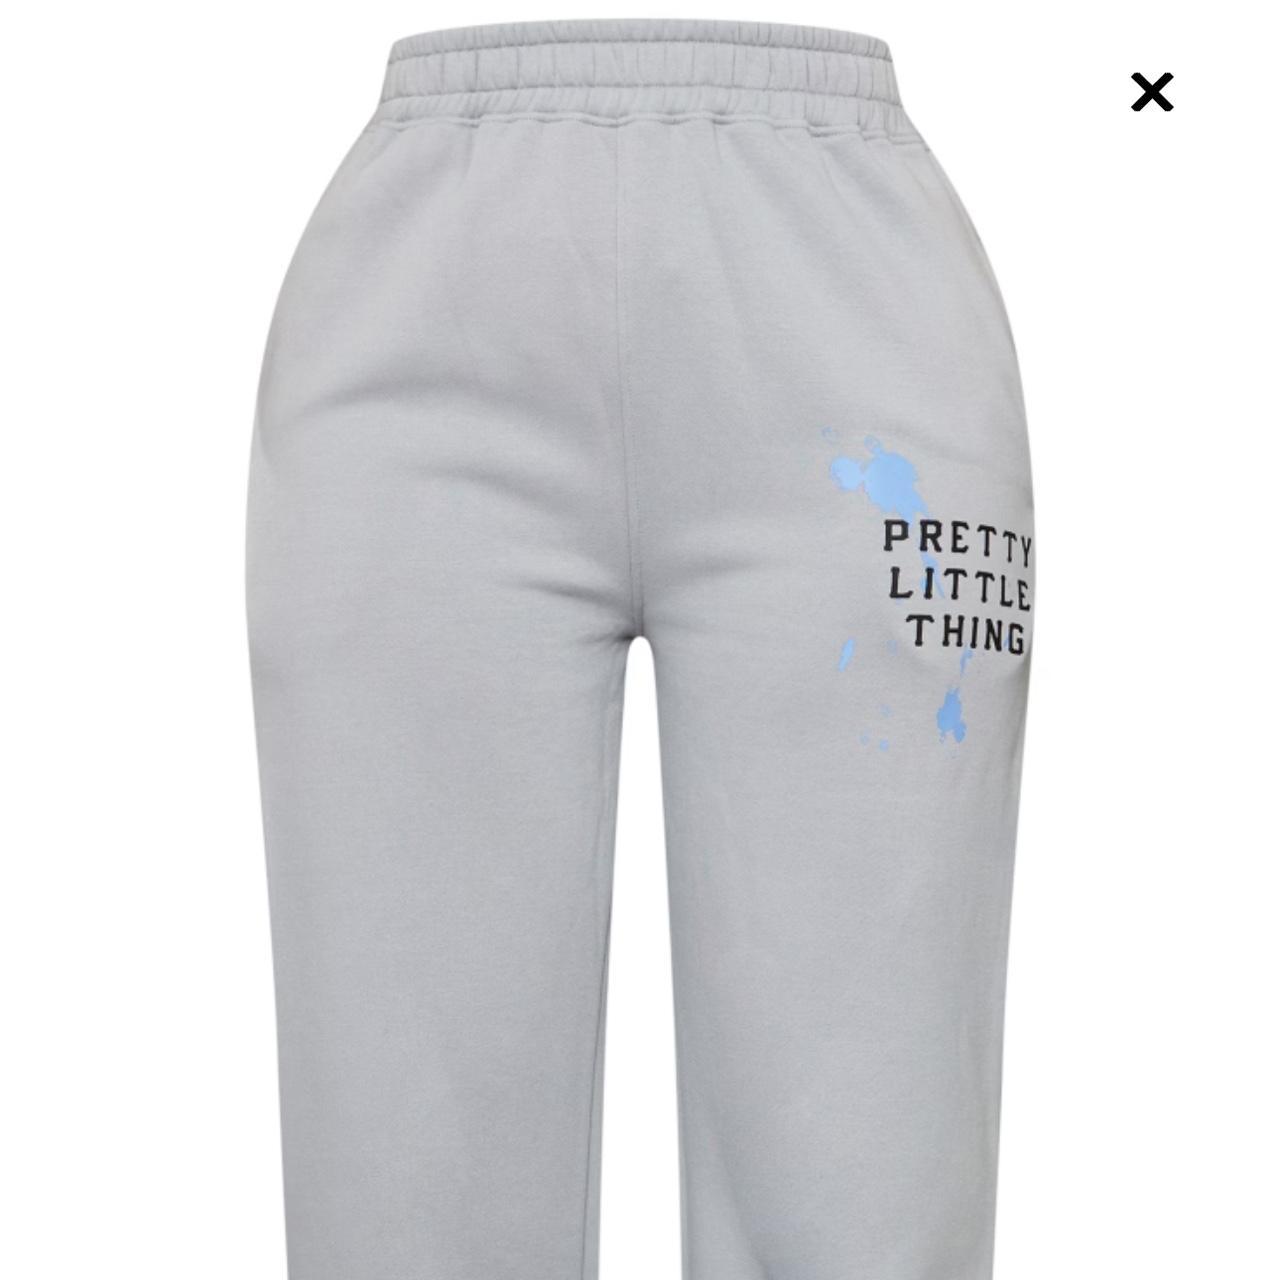 PLT Shape Grey Sweatpants (They fit oversized) - Depop